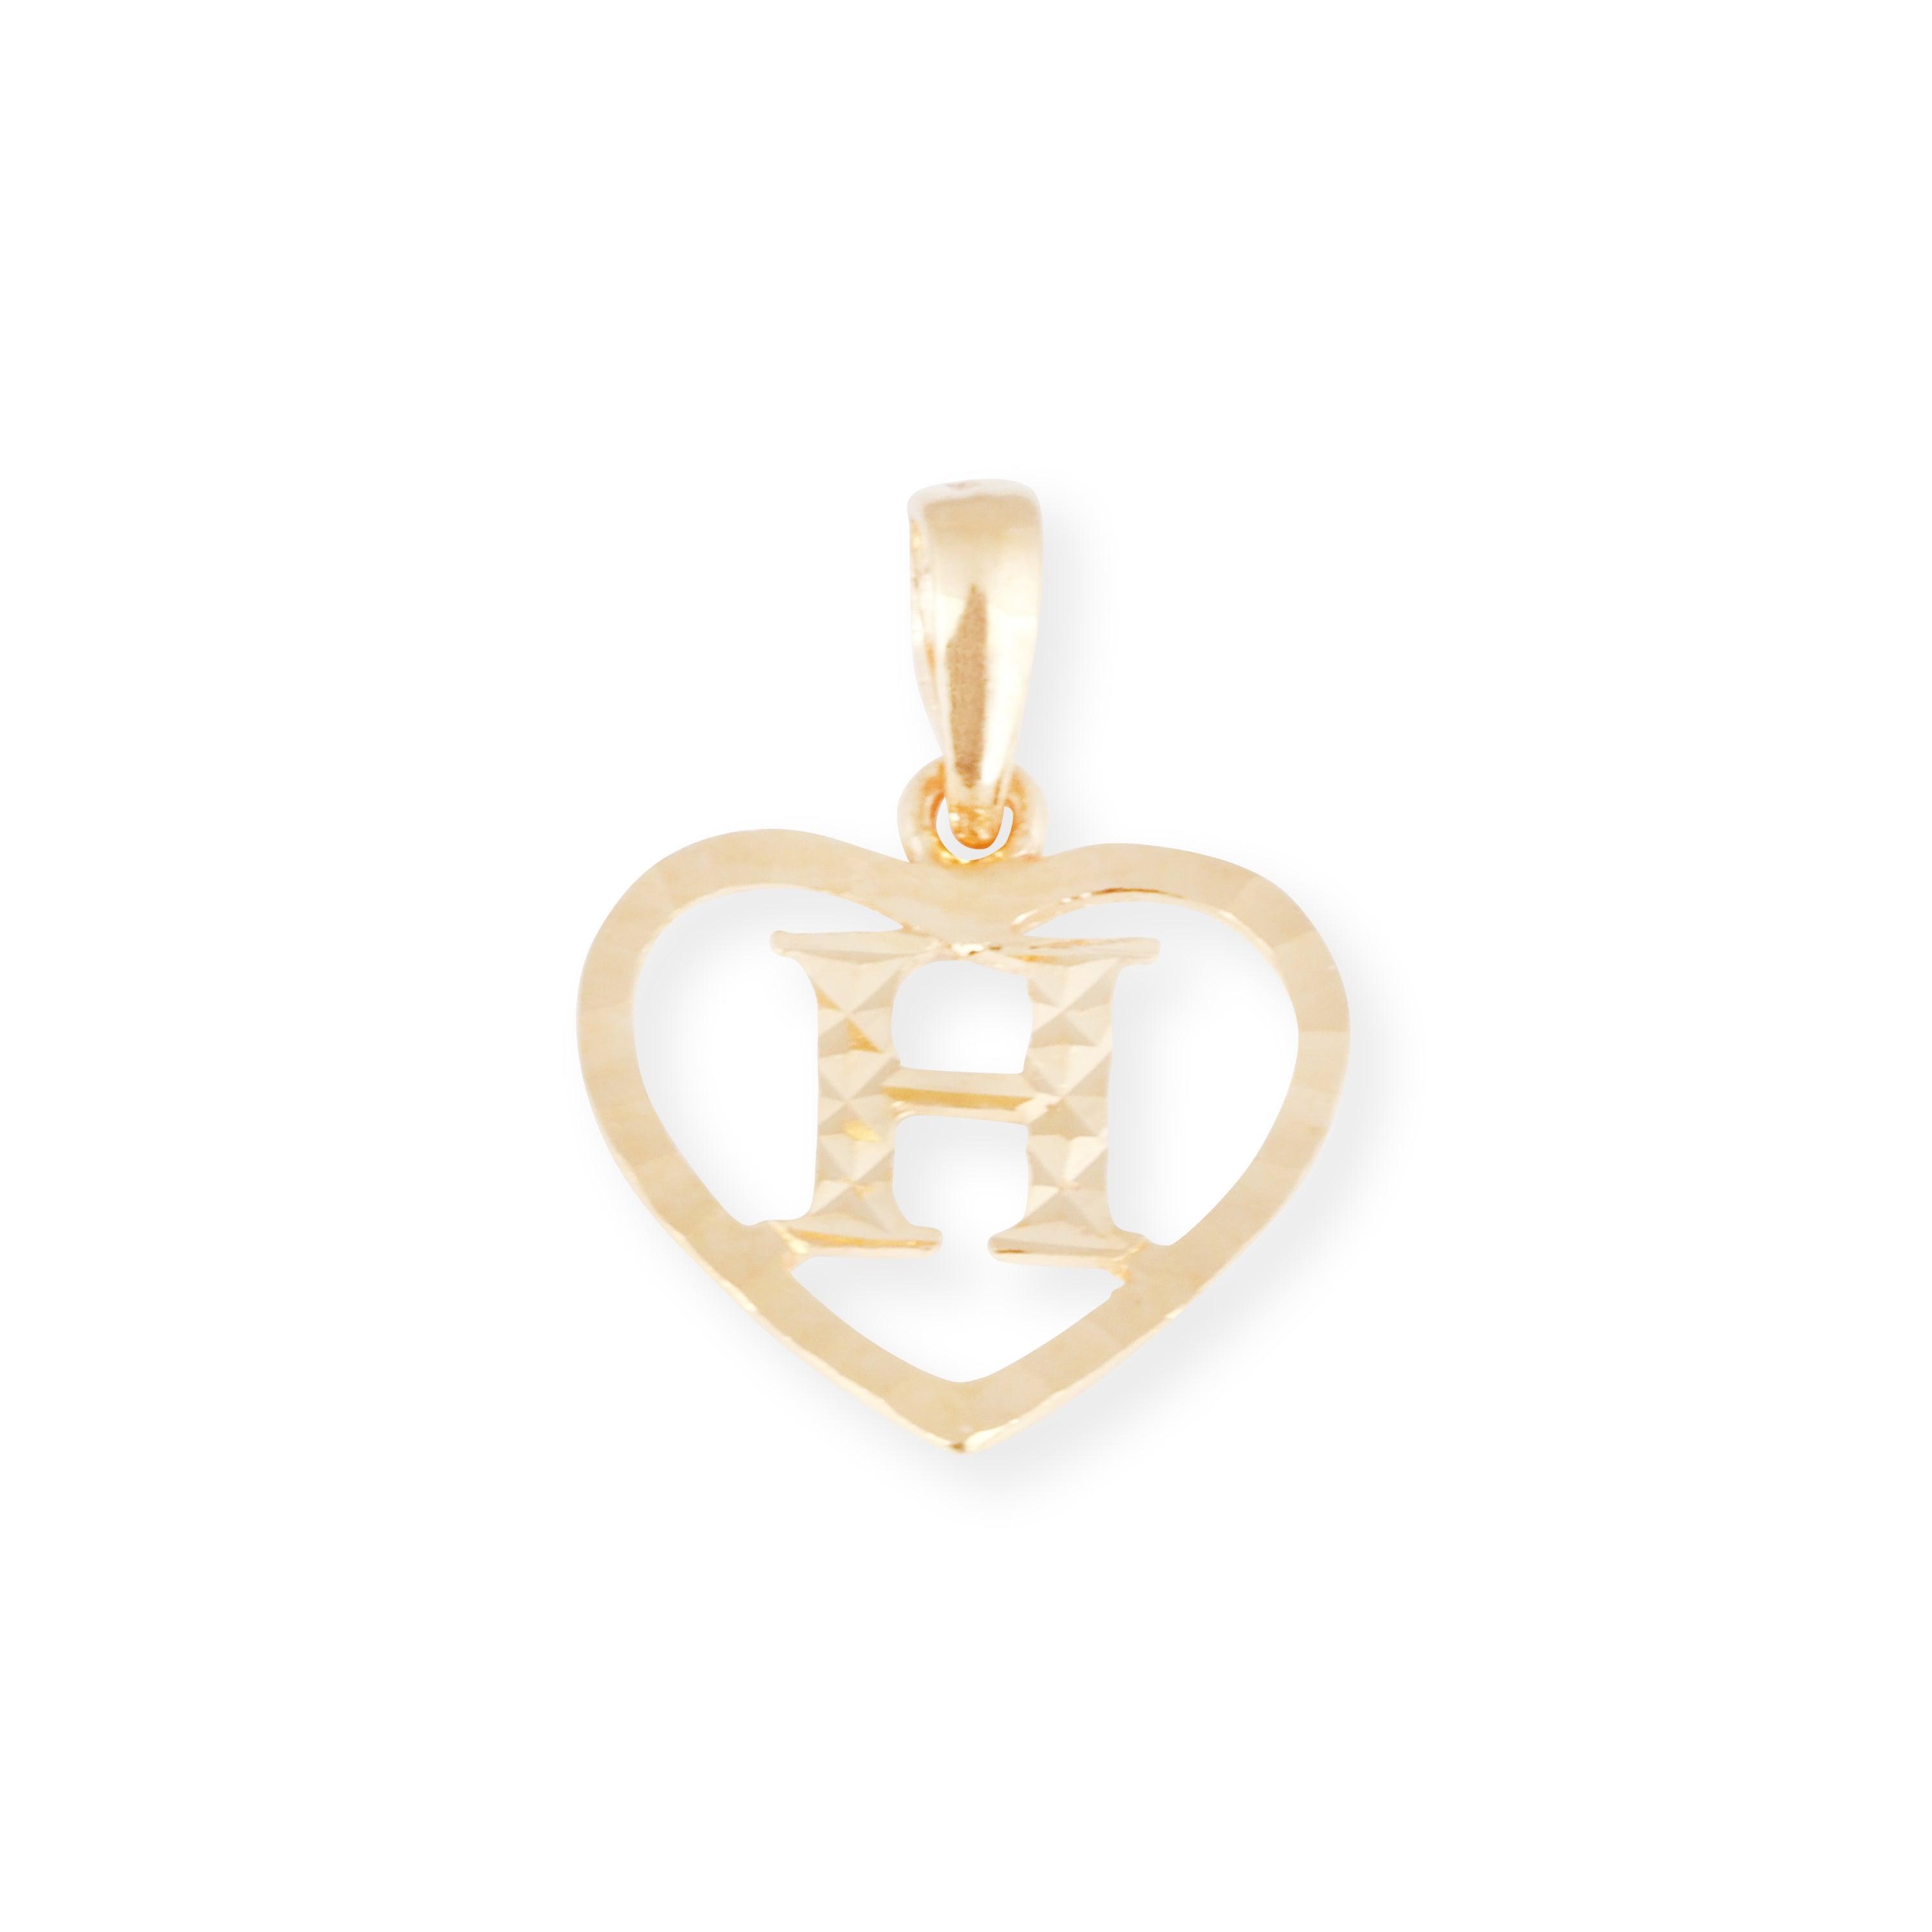 'H' 22ct Gold Heart Shape Initial Pendant P-8533-H - Minar Jewellers